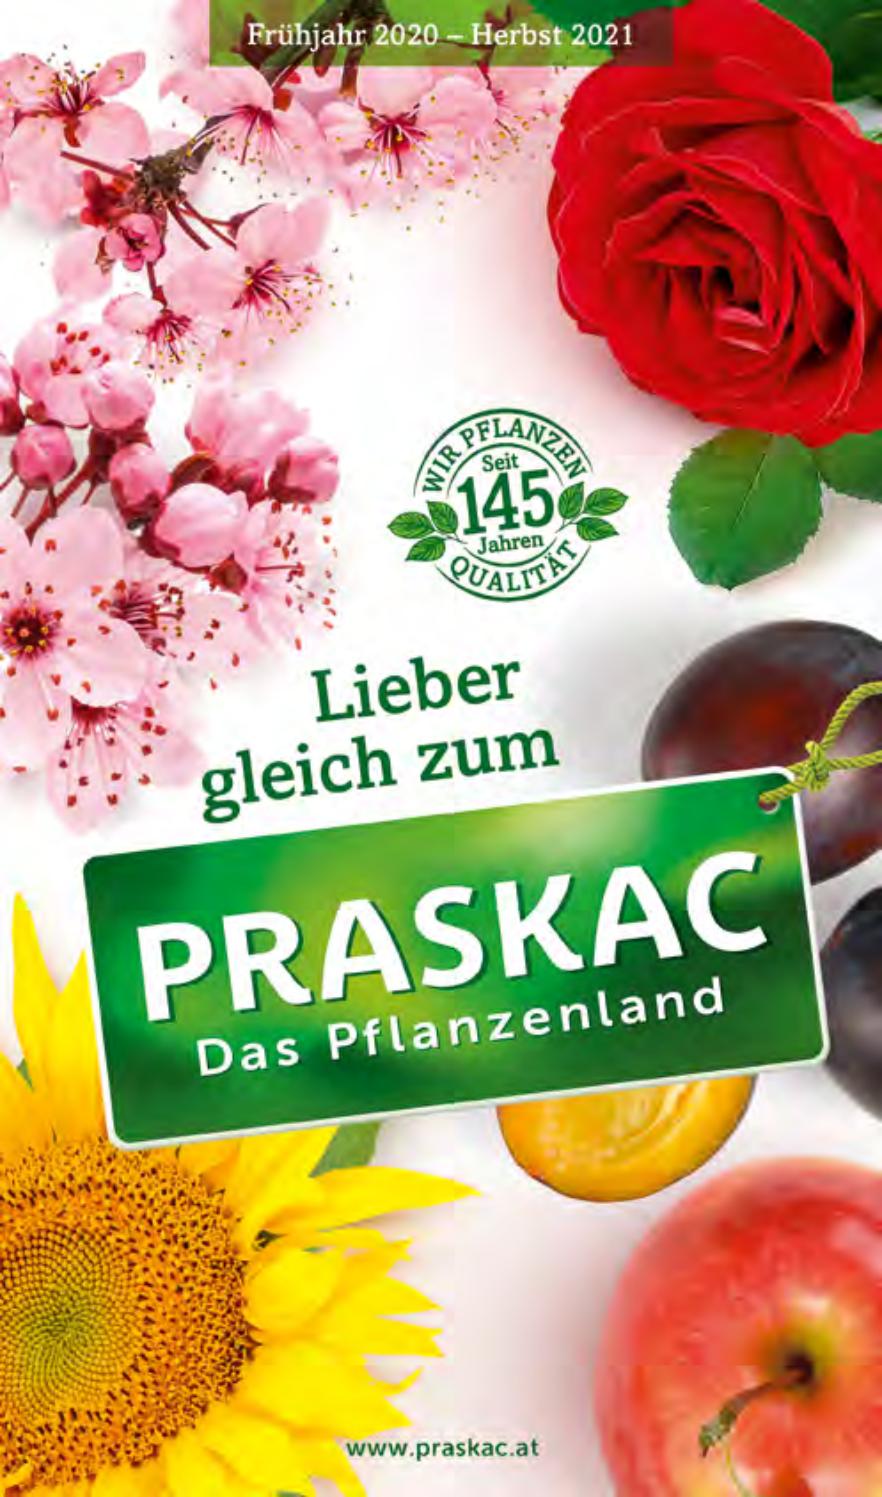 Pflanzstein Ideen Neu Praskac Pflanzen Katalog 2020 by Praskac Pflanzenland issuu